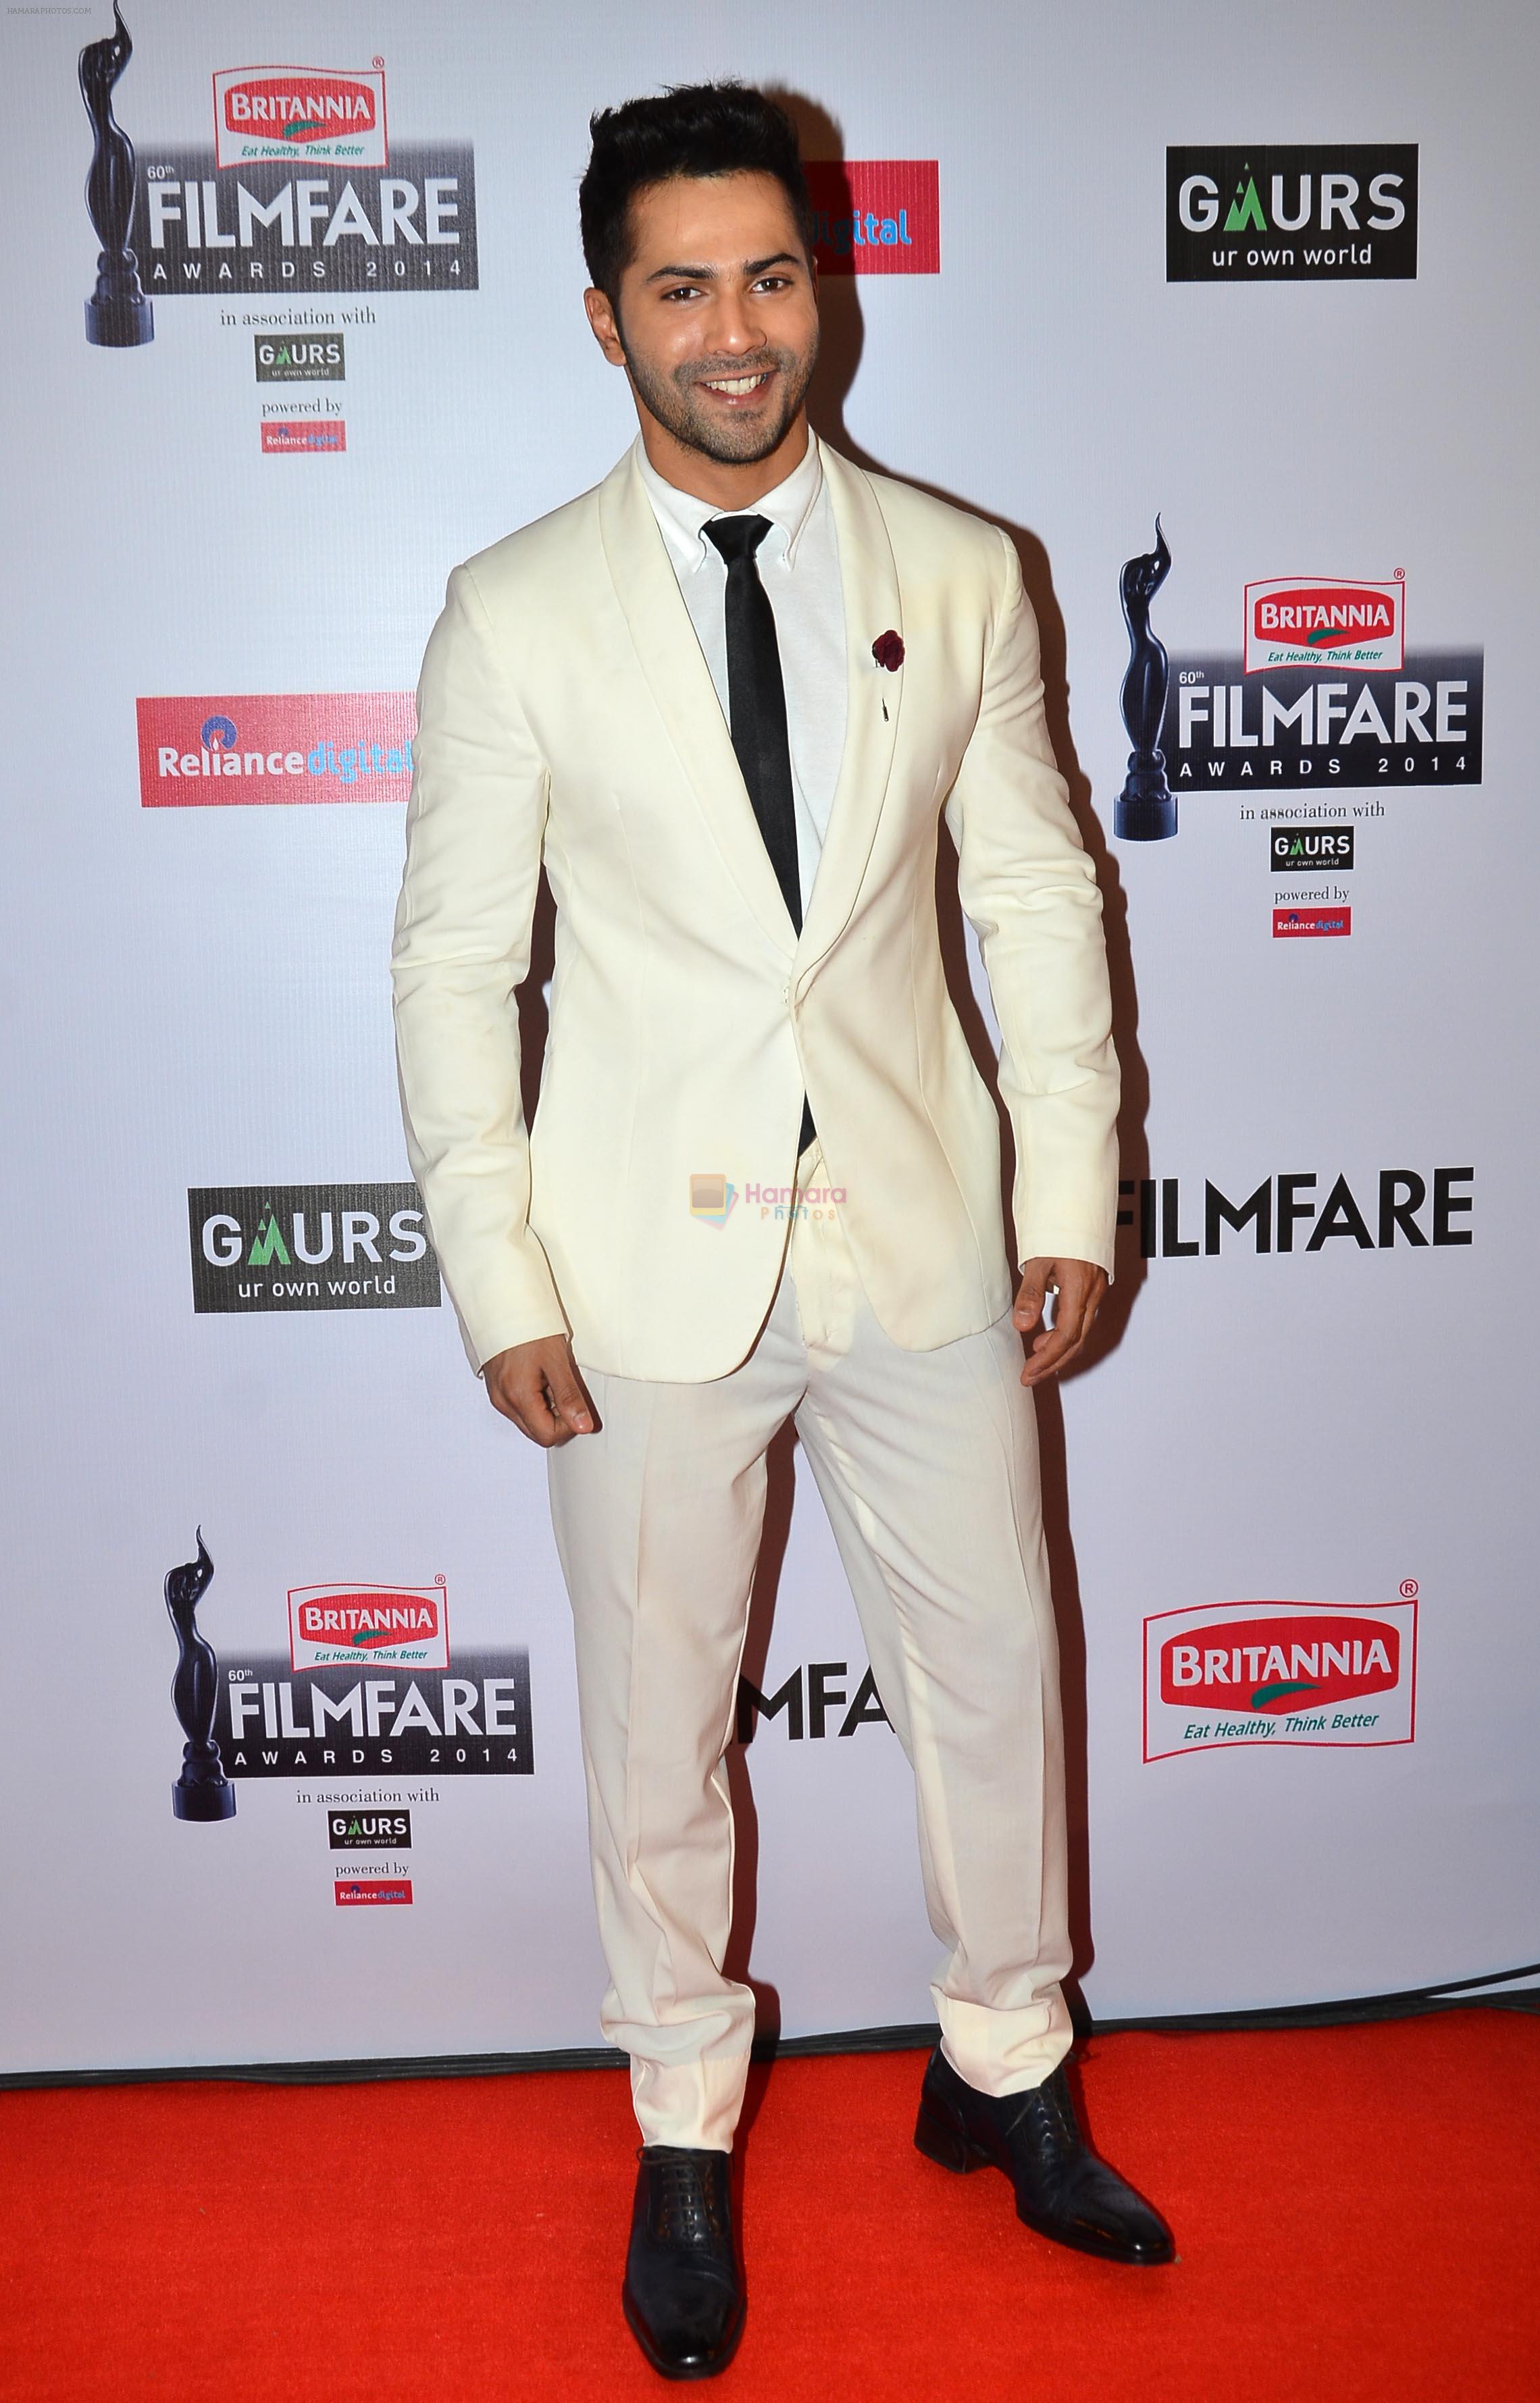 Varun Dhawan graces the red carpet at the 60th Britannia Filmfare Awards